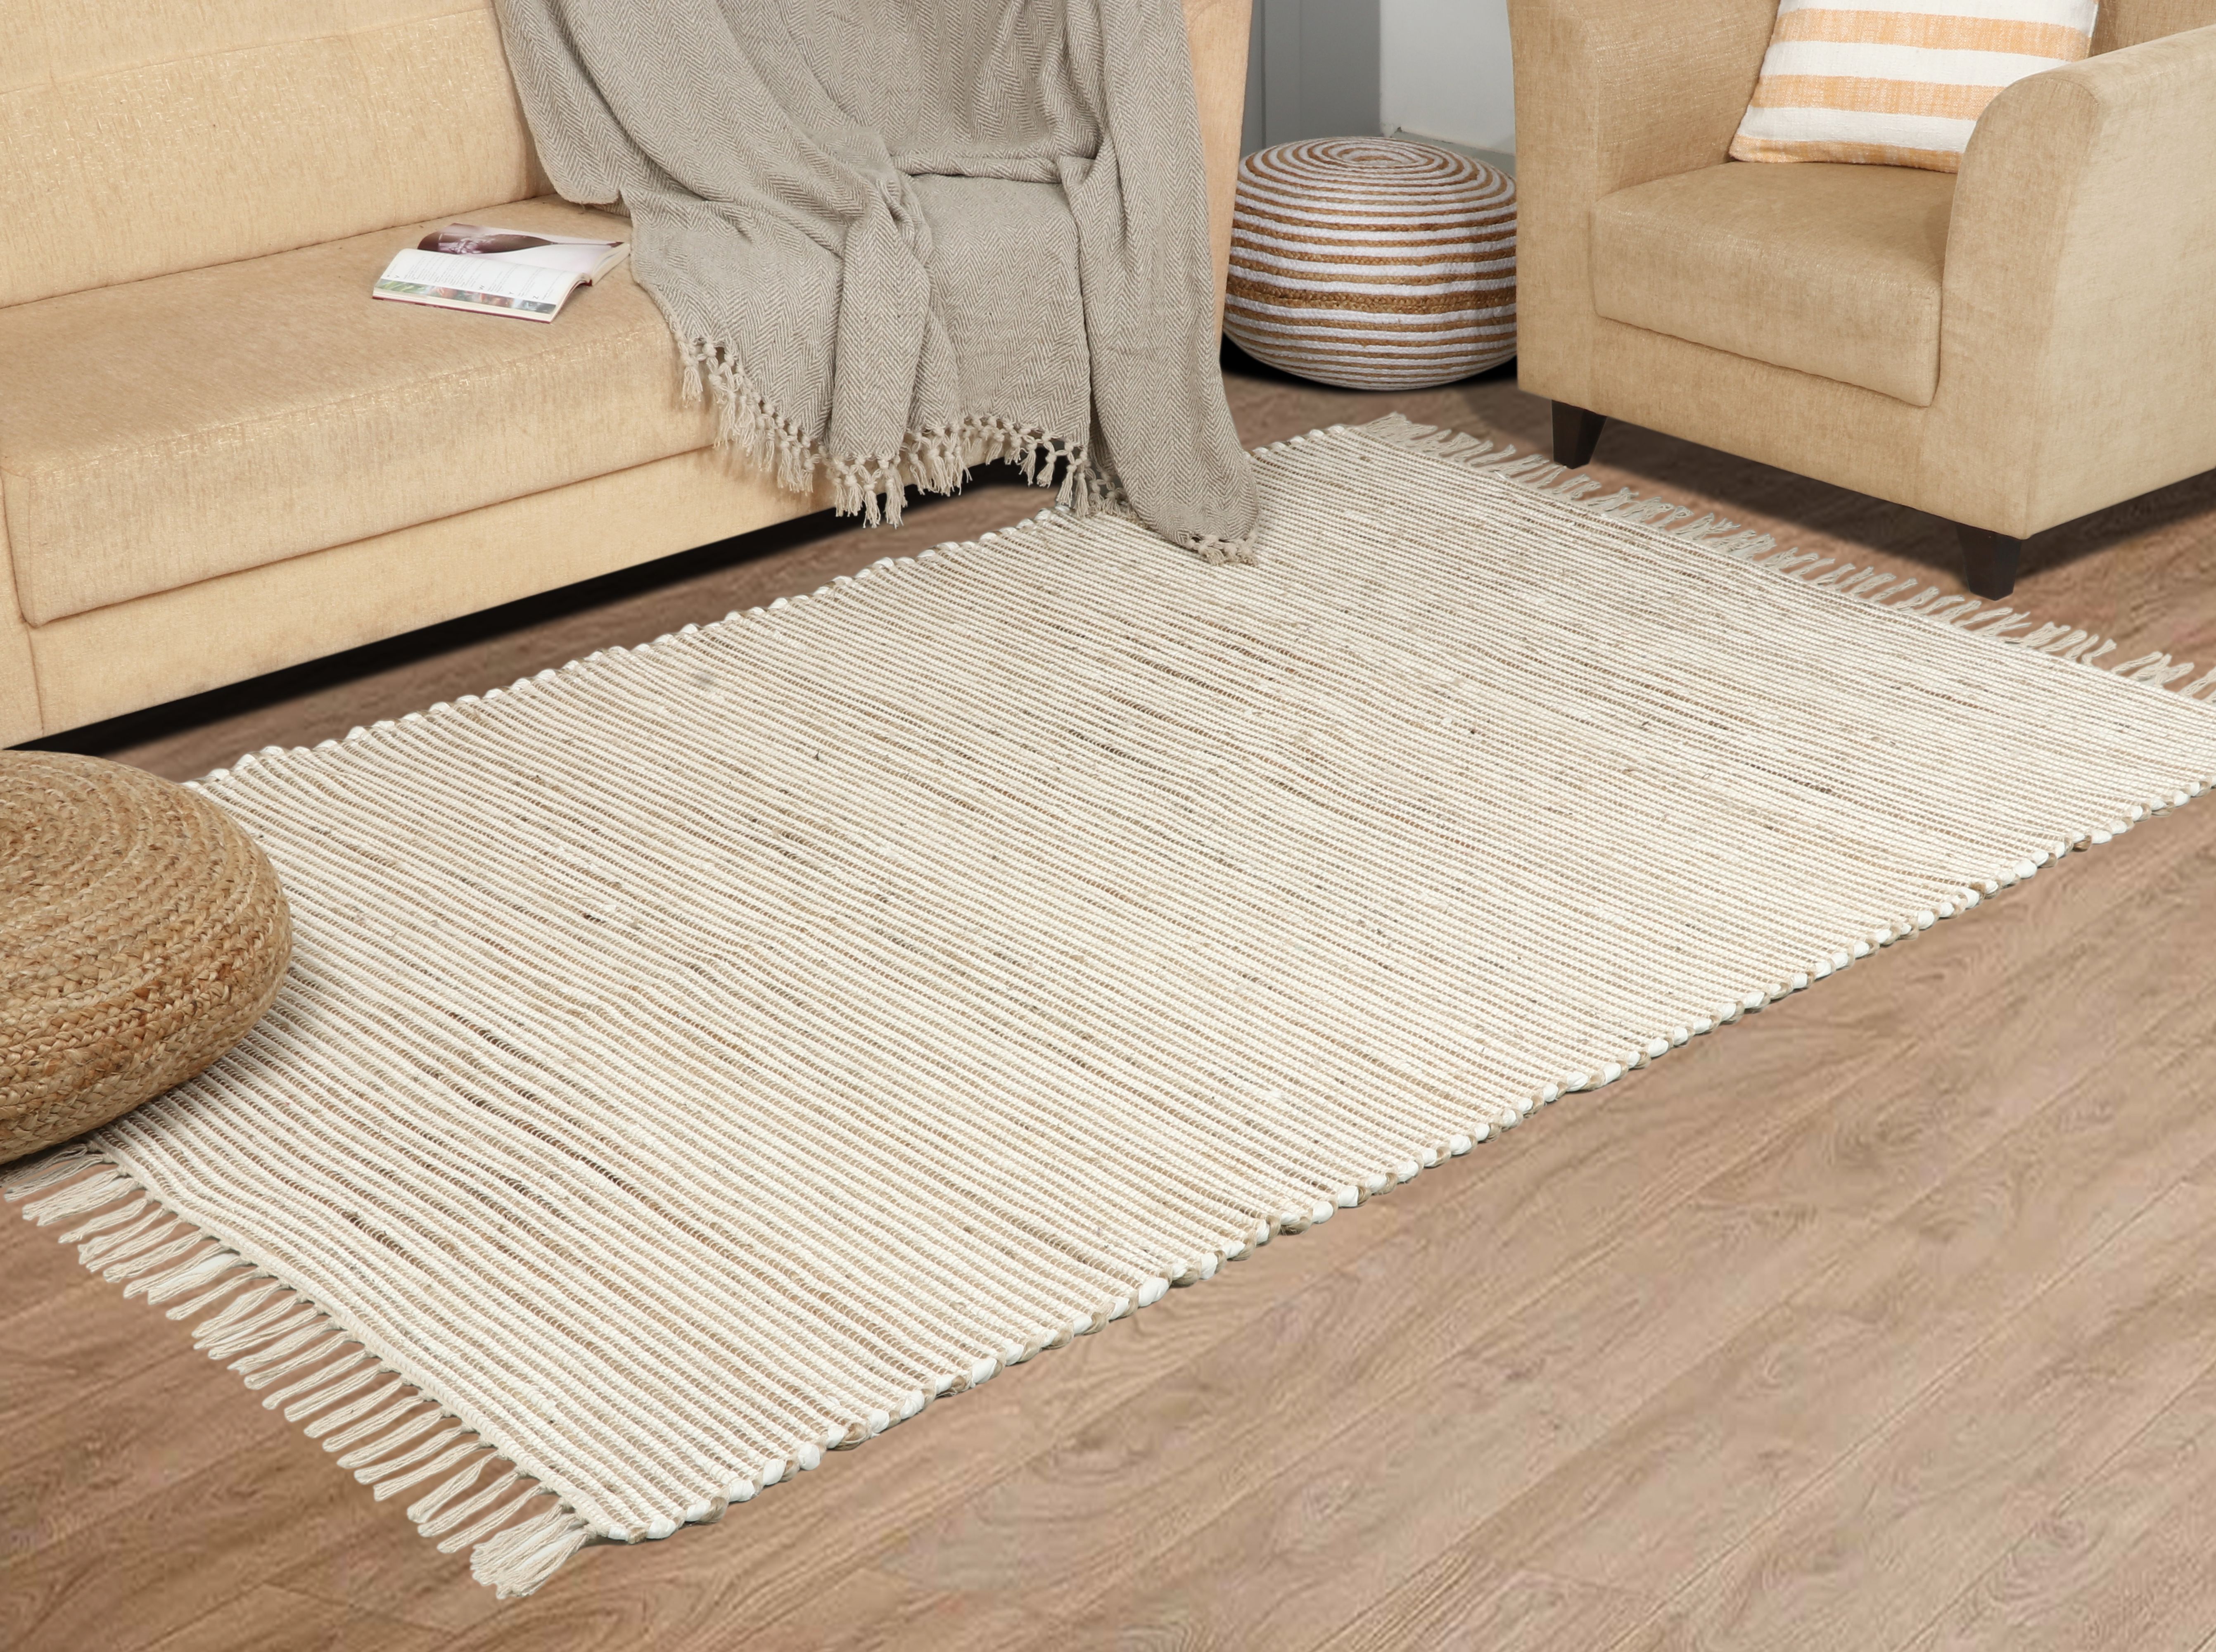 Cotton rugs & mats